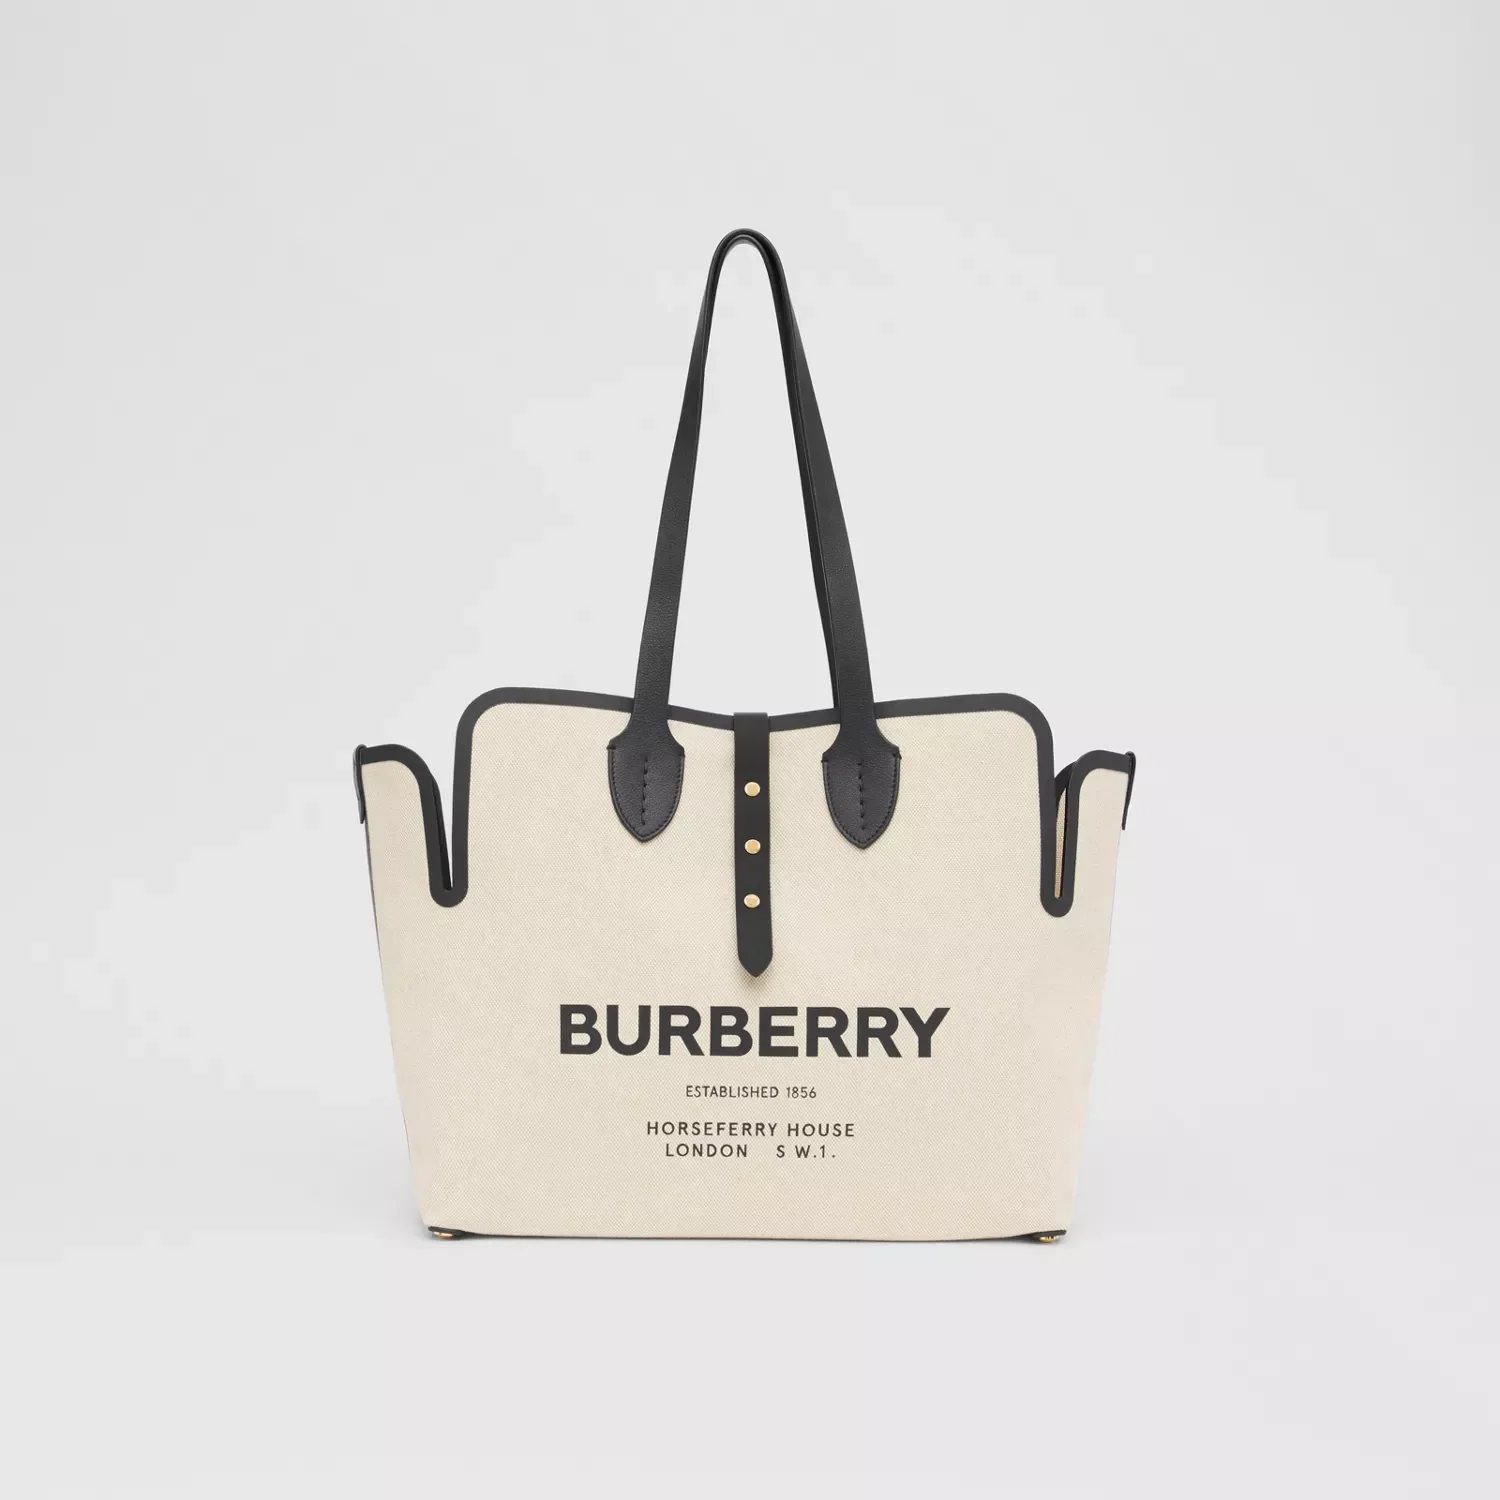 Burberry established 1856 сумка. Burberry established сумка established 1856. Сумка тоут Барбери. Burberry 1856 сумка. Лейбл сумки